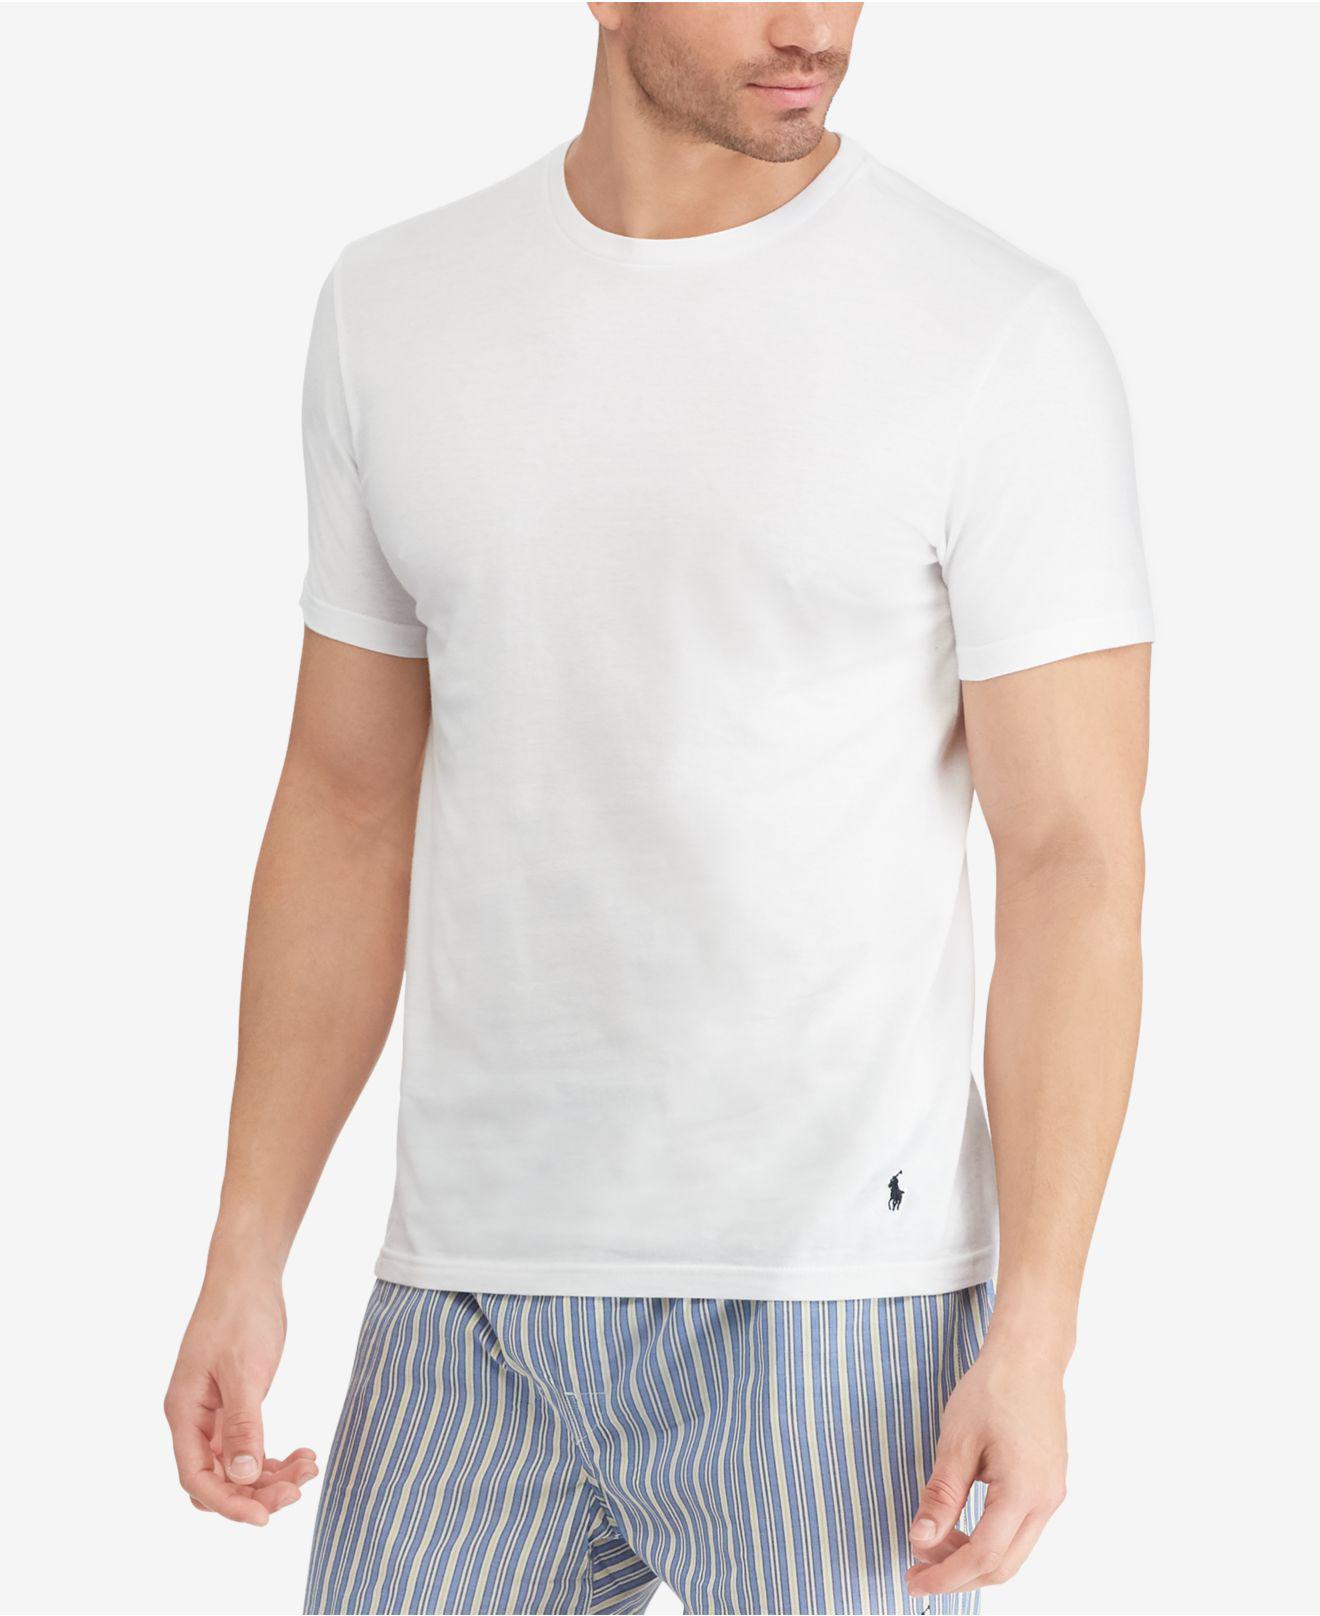 ralph lauren white undershirts